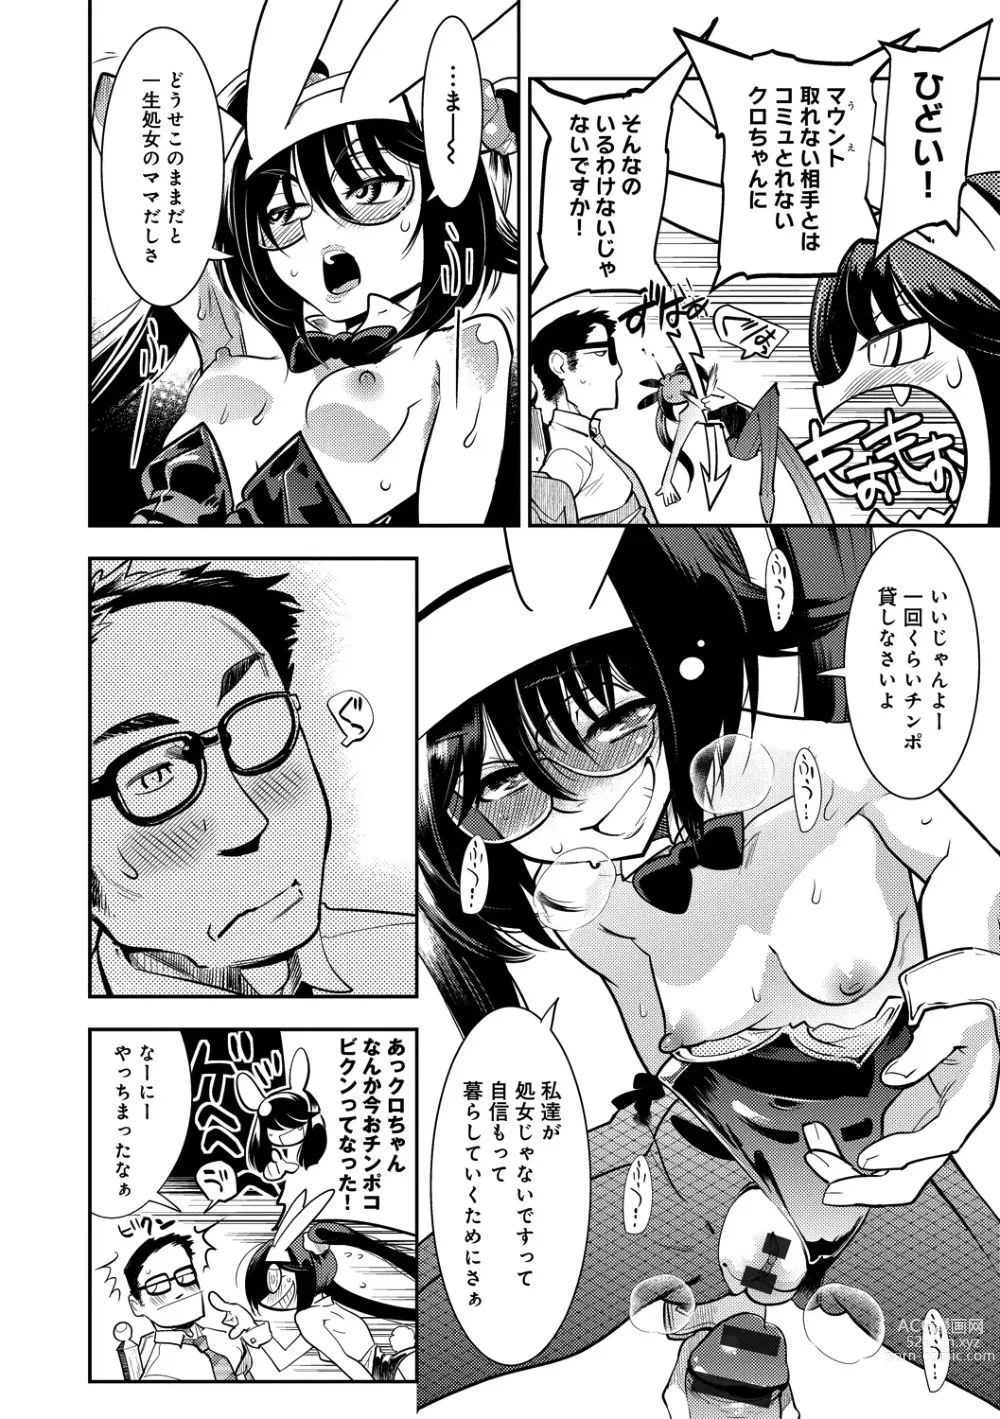 Page 216 of manga Hamekko 3Peace!!!